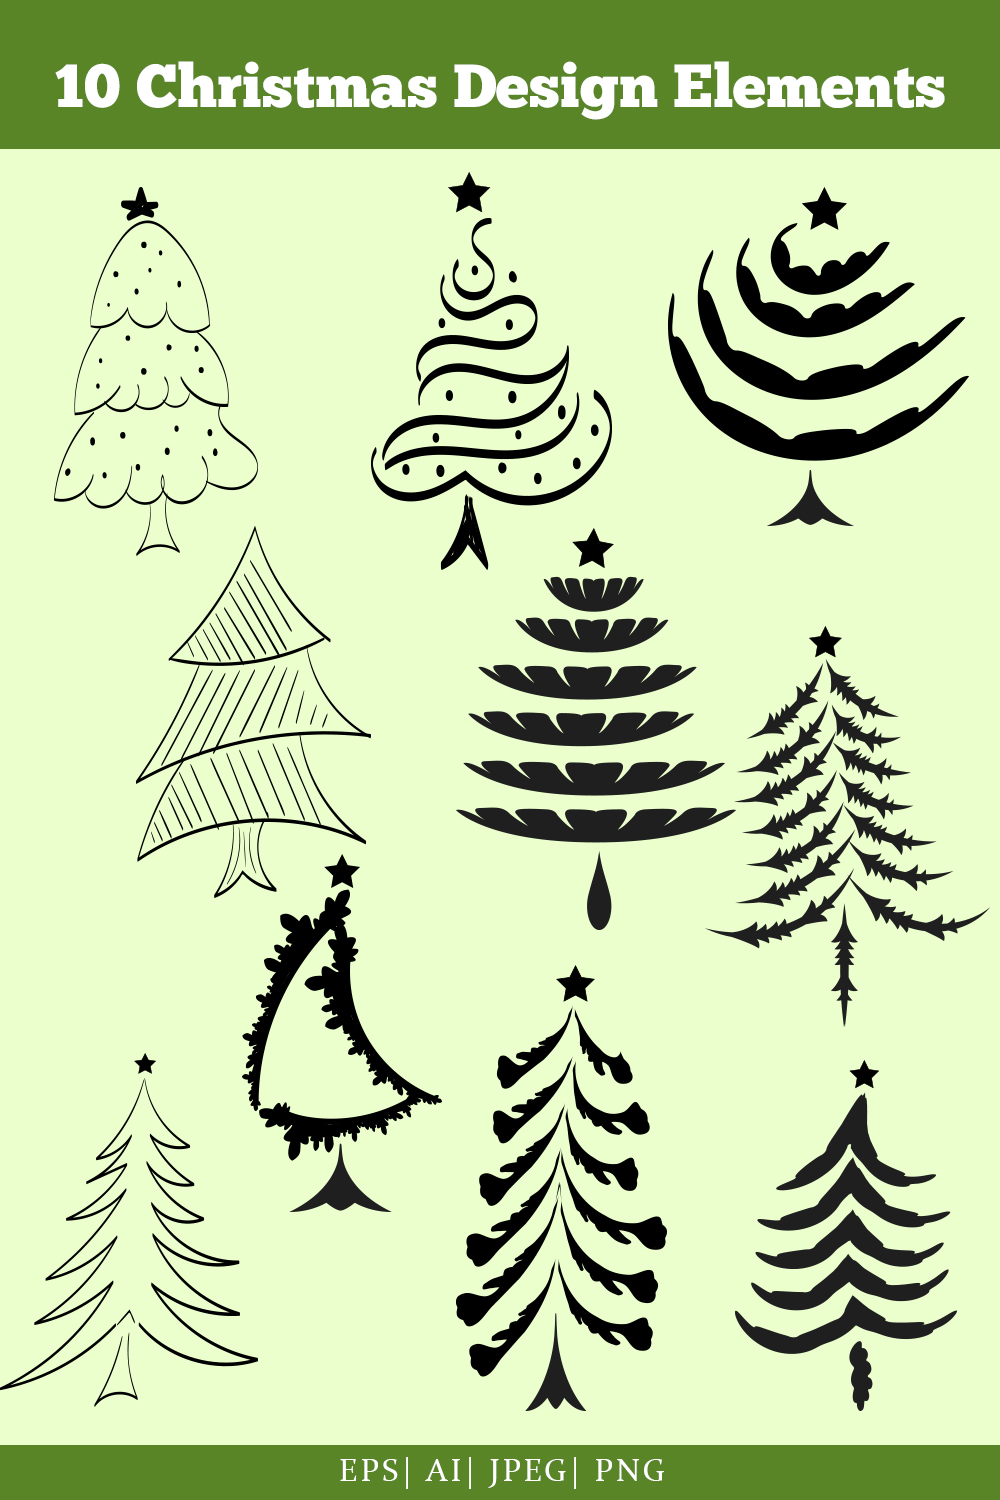 Christmas Tree Design pinterest image.